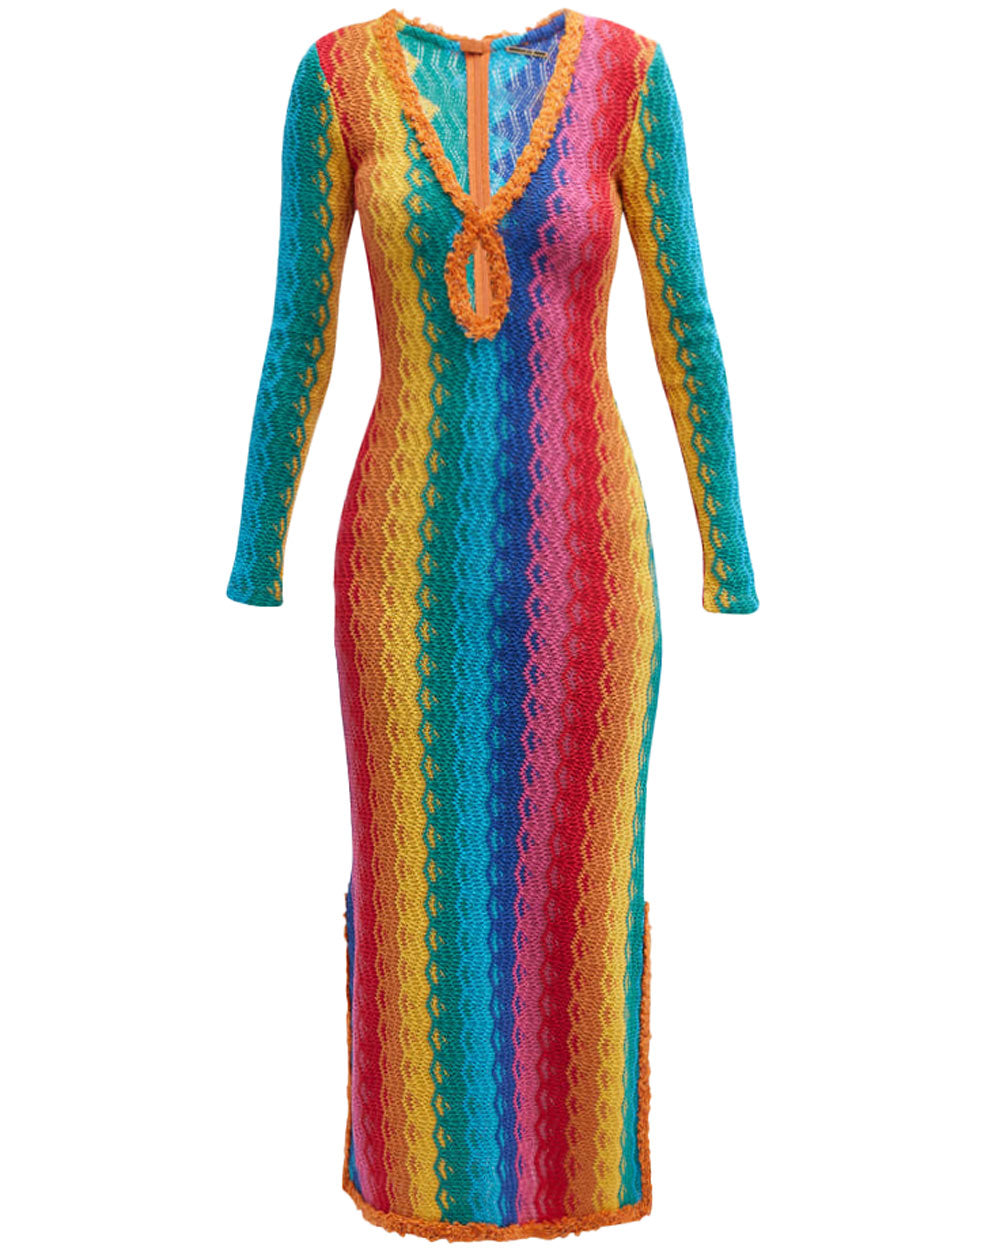 Rio Solei Knit Dress